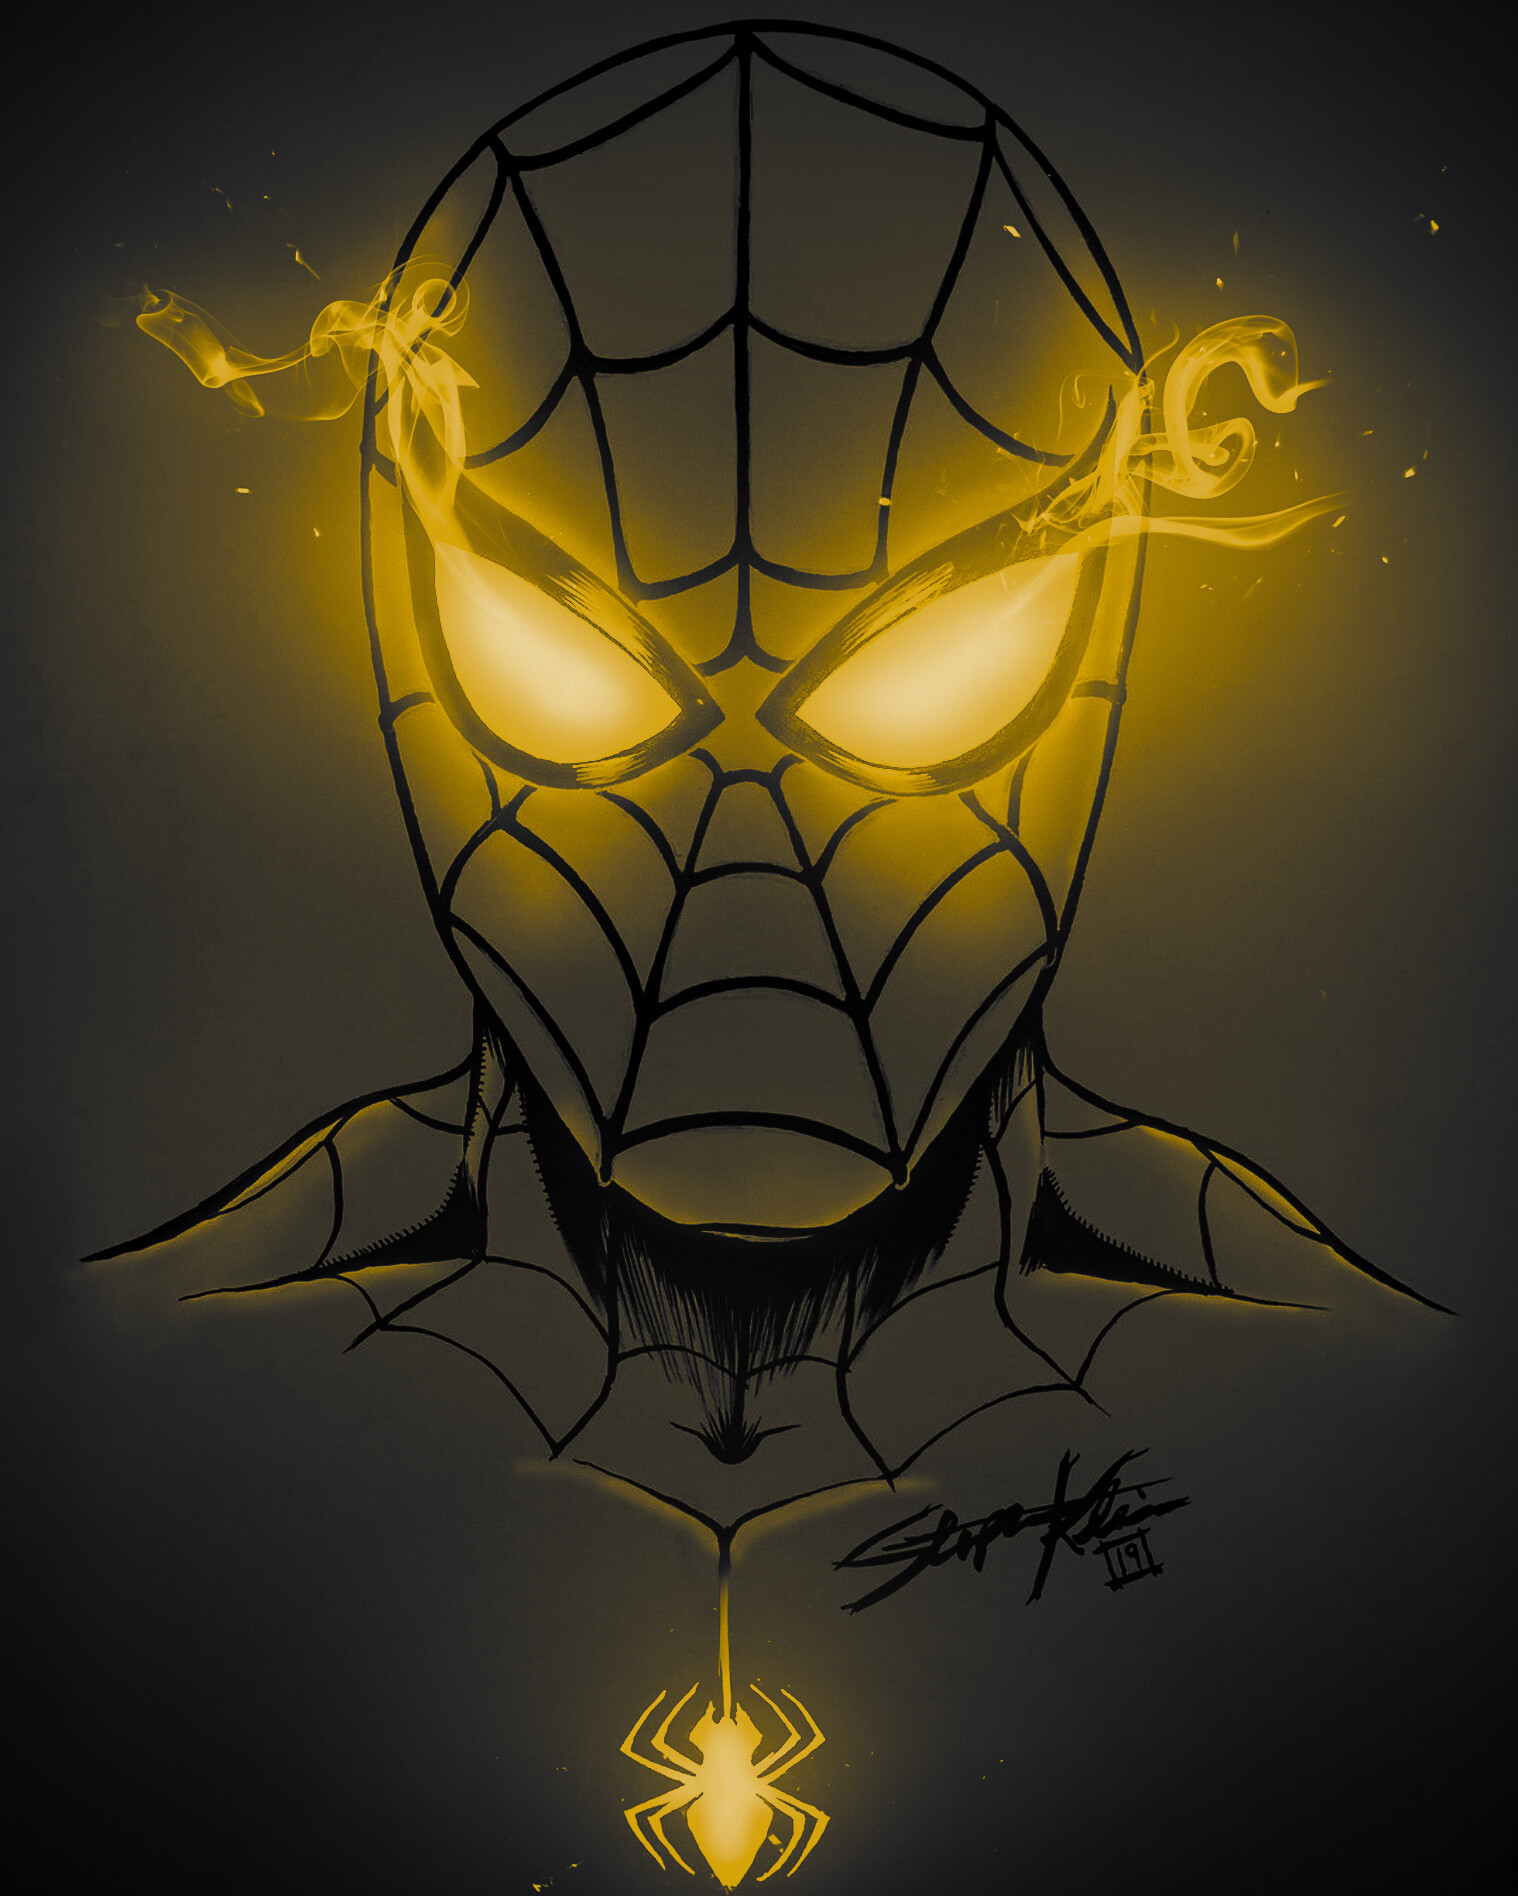 spiderman 1 wallpaper